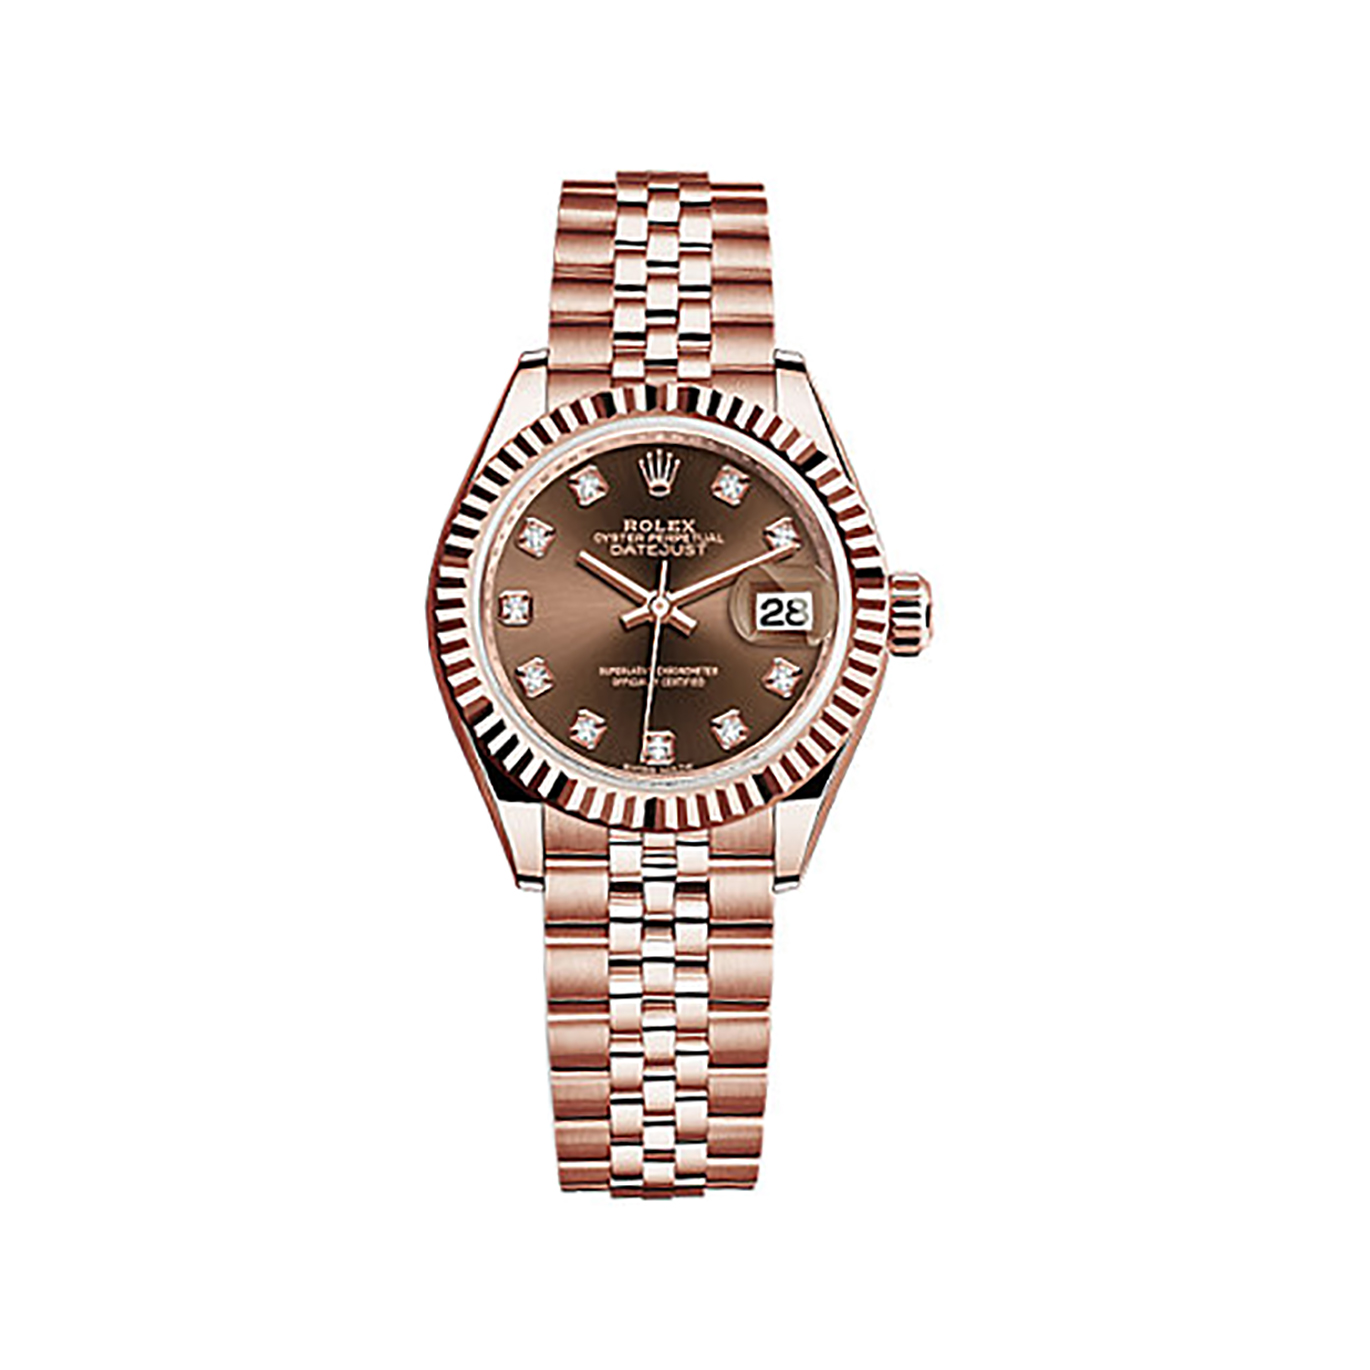 Lady-Datejust 28 279175 Rose Gold Watch (Chocolate Set with Diamonds)